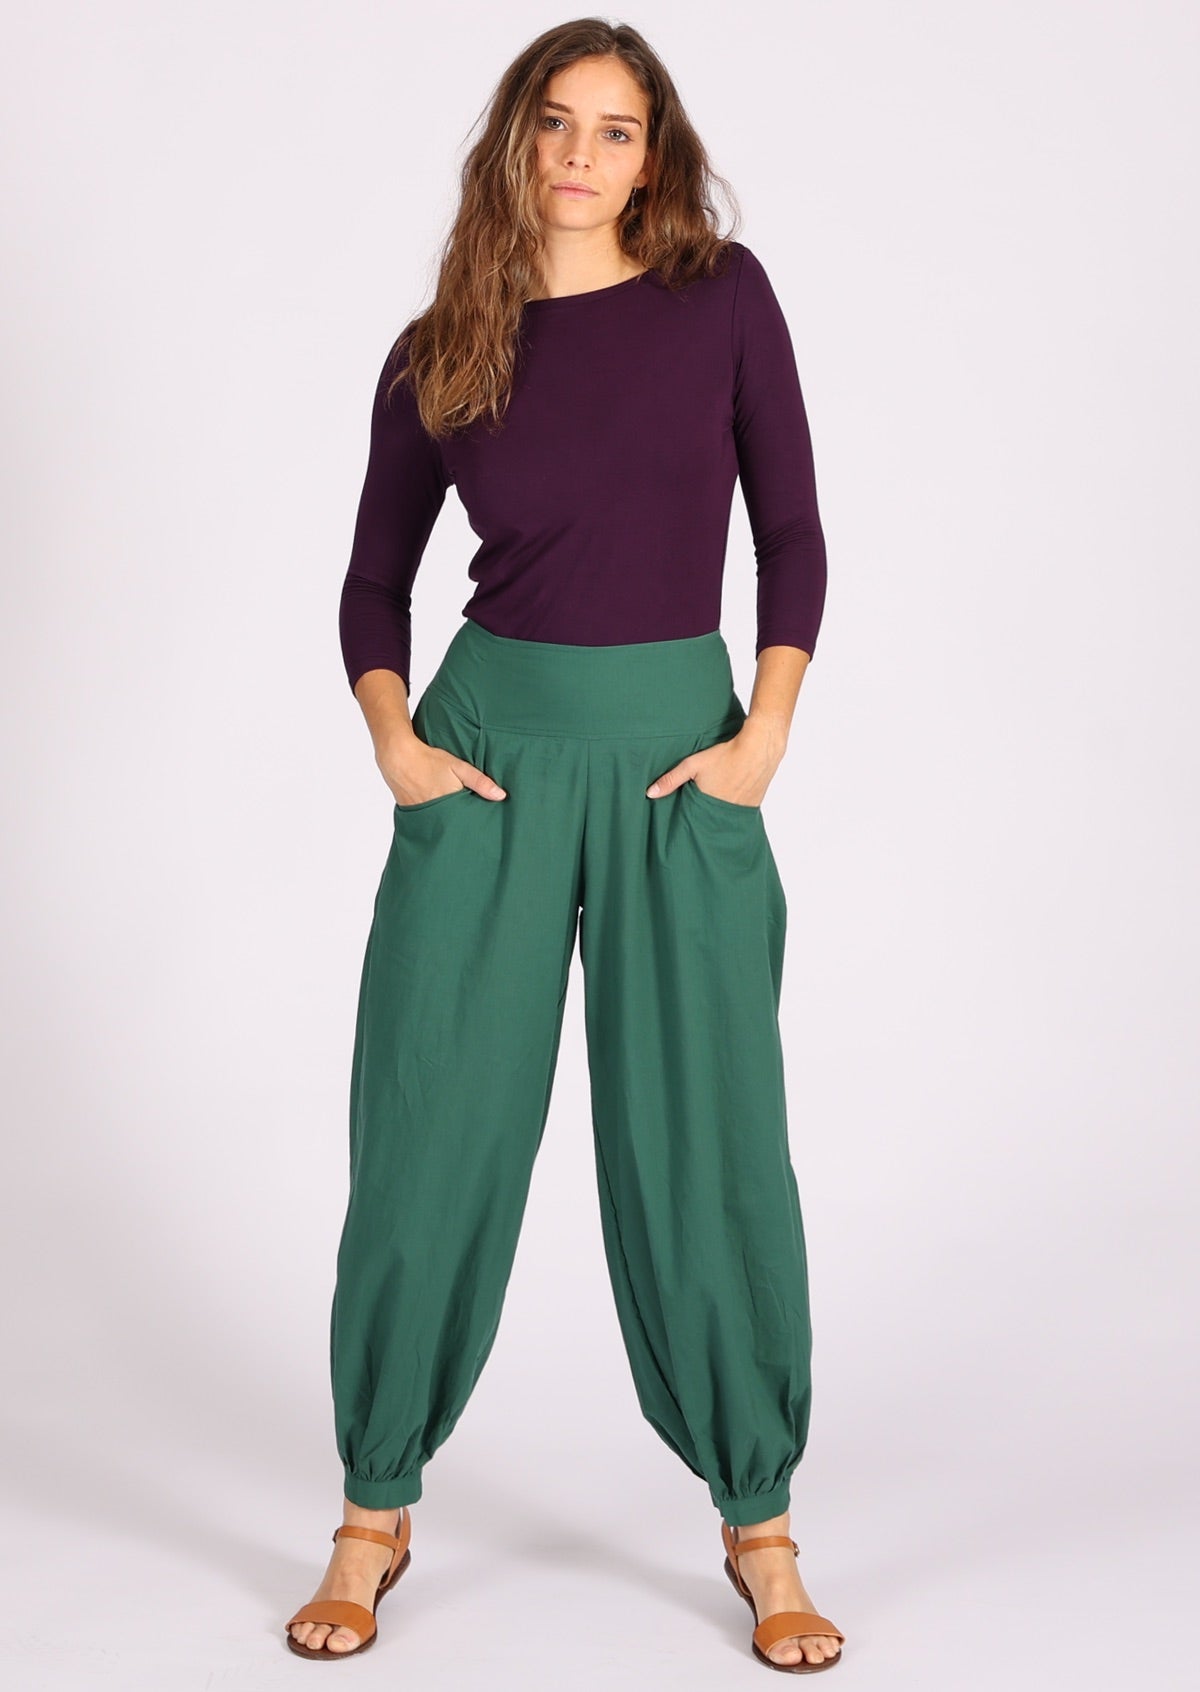 Hunter Green lightweight cotton harem pants with pockets